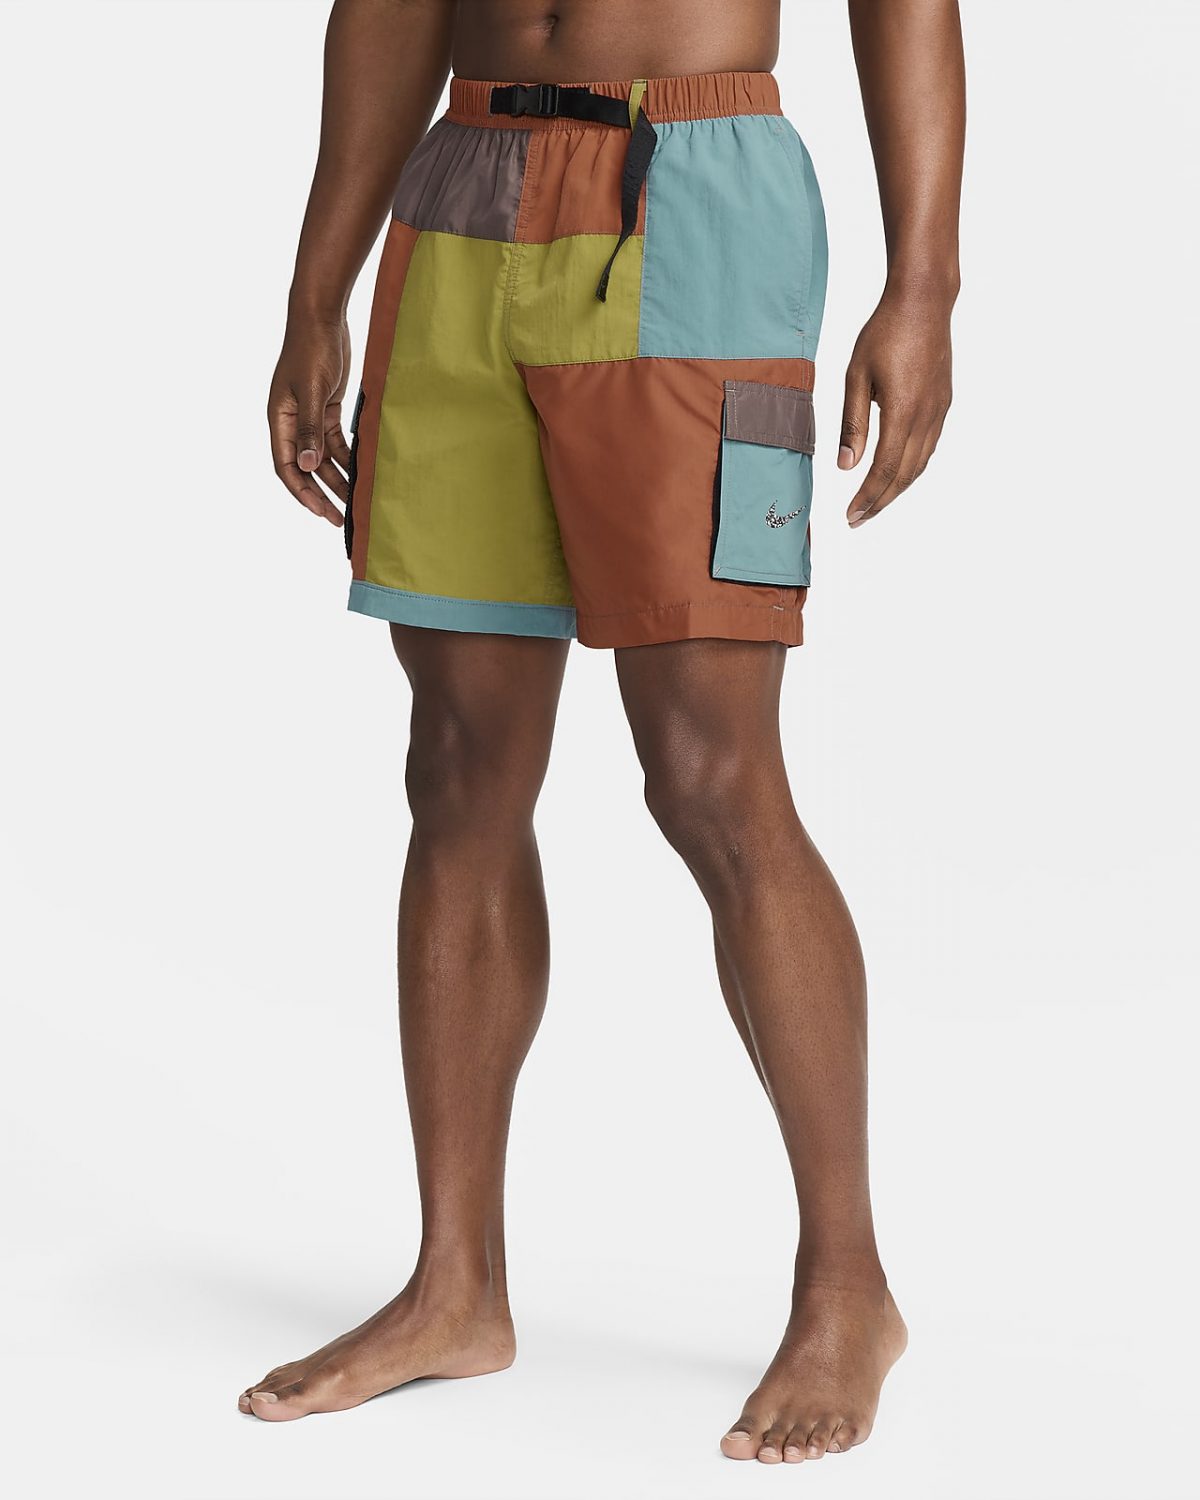 Мужские шорты Nike Swim Voyage фото